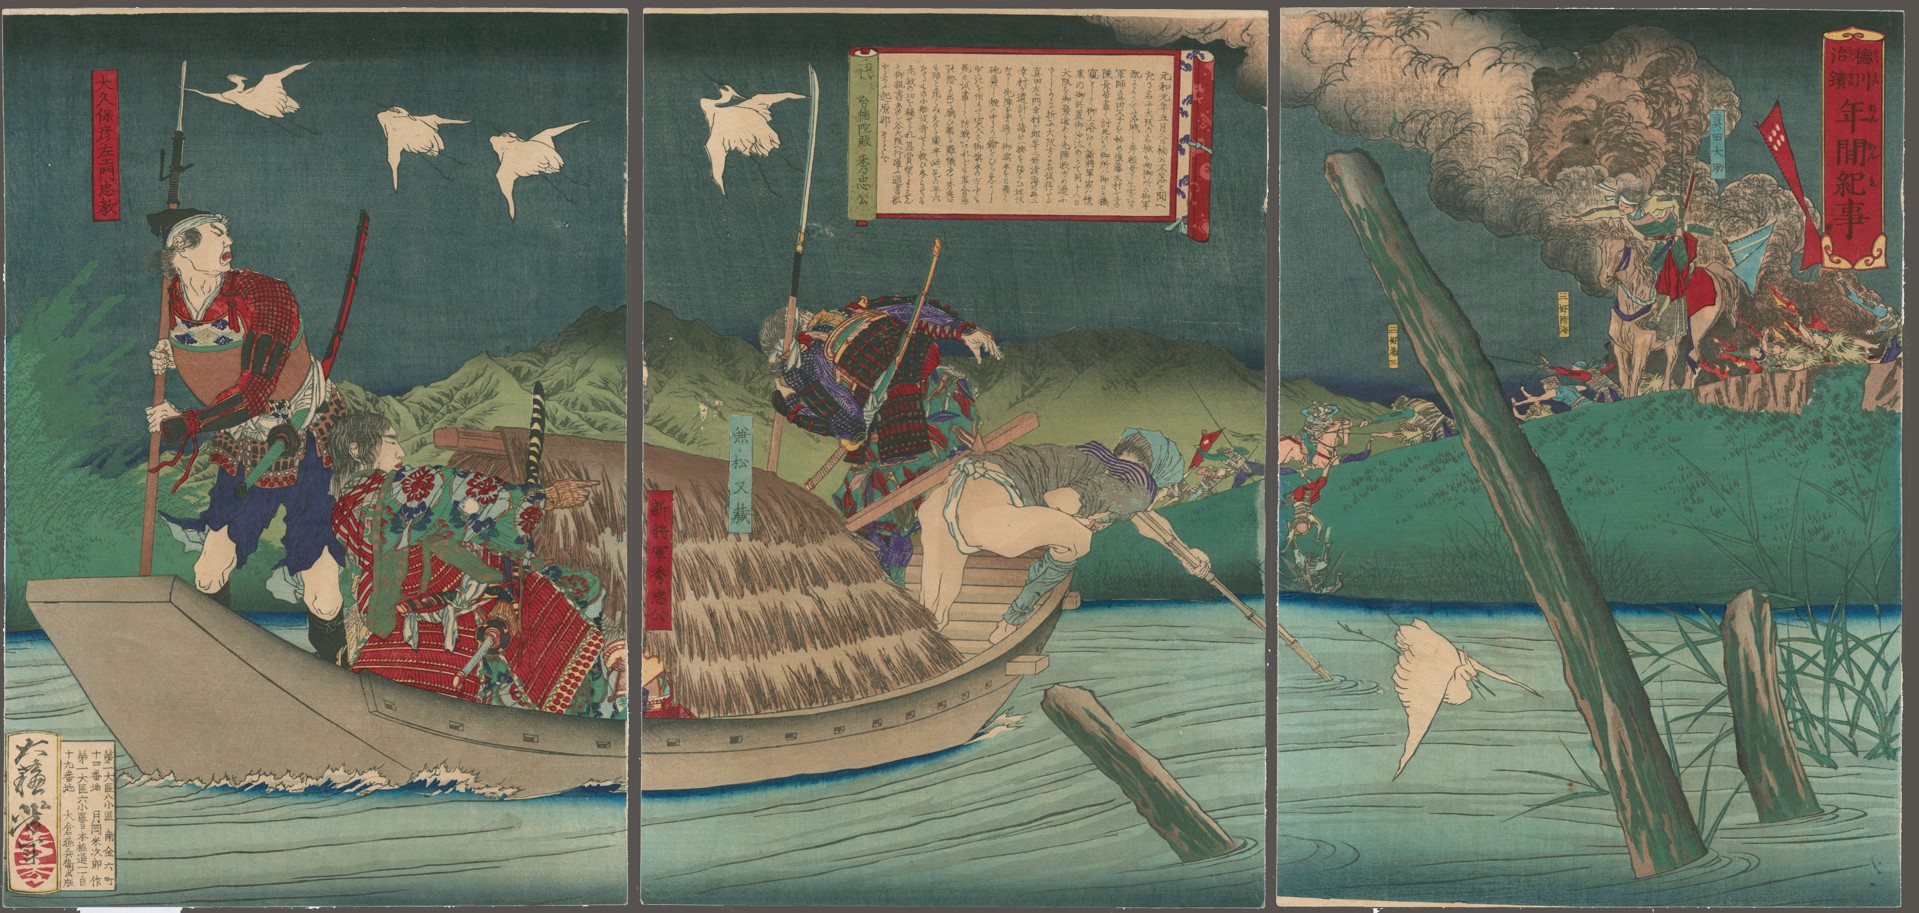 Tokugawa Hidetada, the Second Shogun, Fleeing with Okubo from Sanada Daisuke at the Battle of Osaka Castle Annals of the Tokugawa Administration by Yoshitoshi